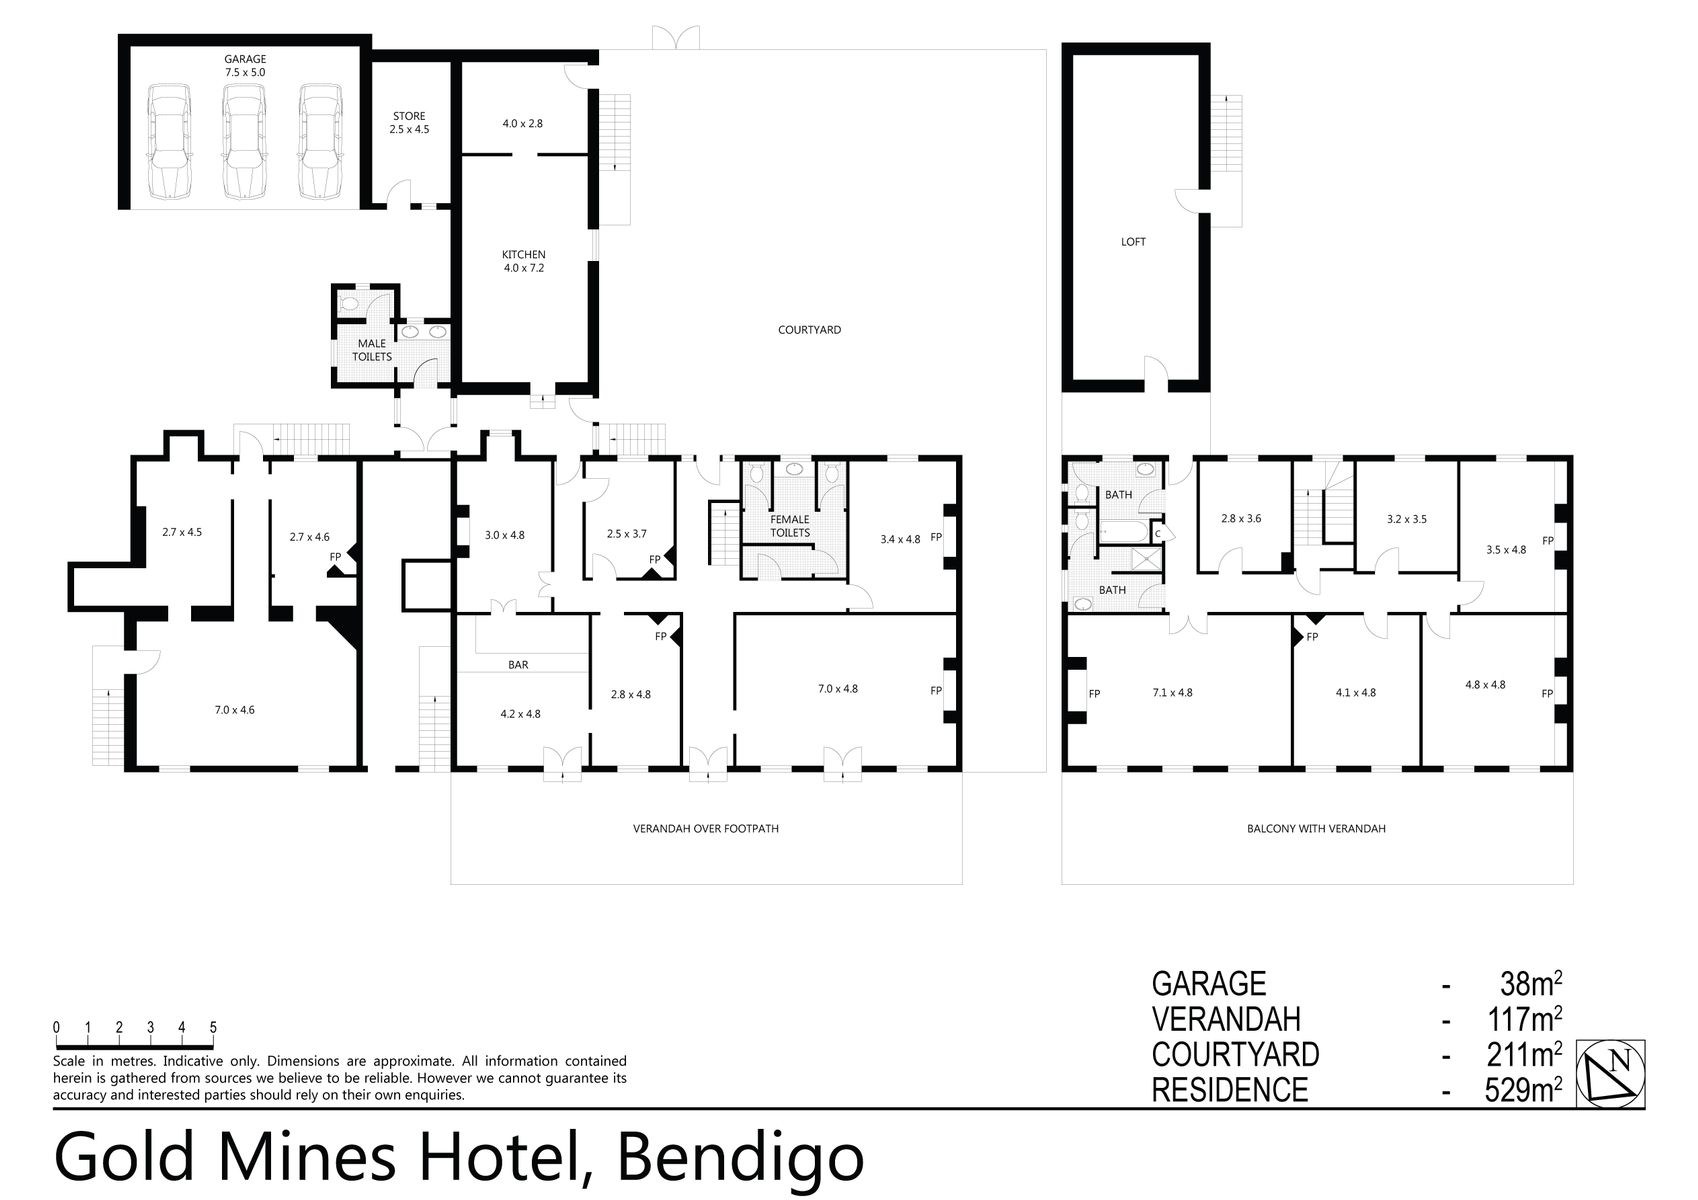 Gold Mines Hotel, Bendigo (23 MARCH 2018) 529sqm